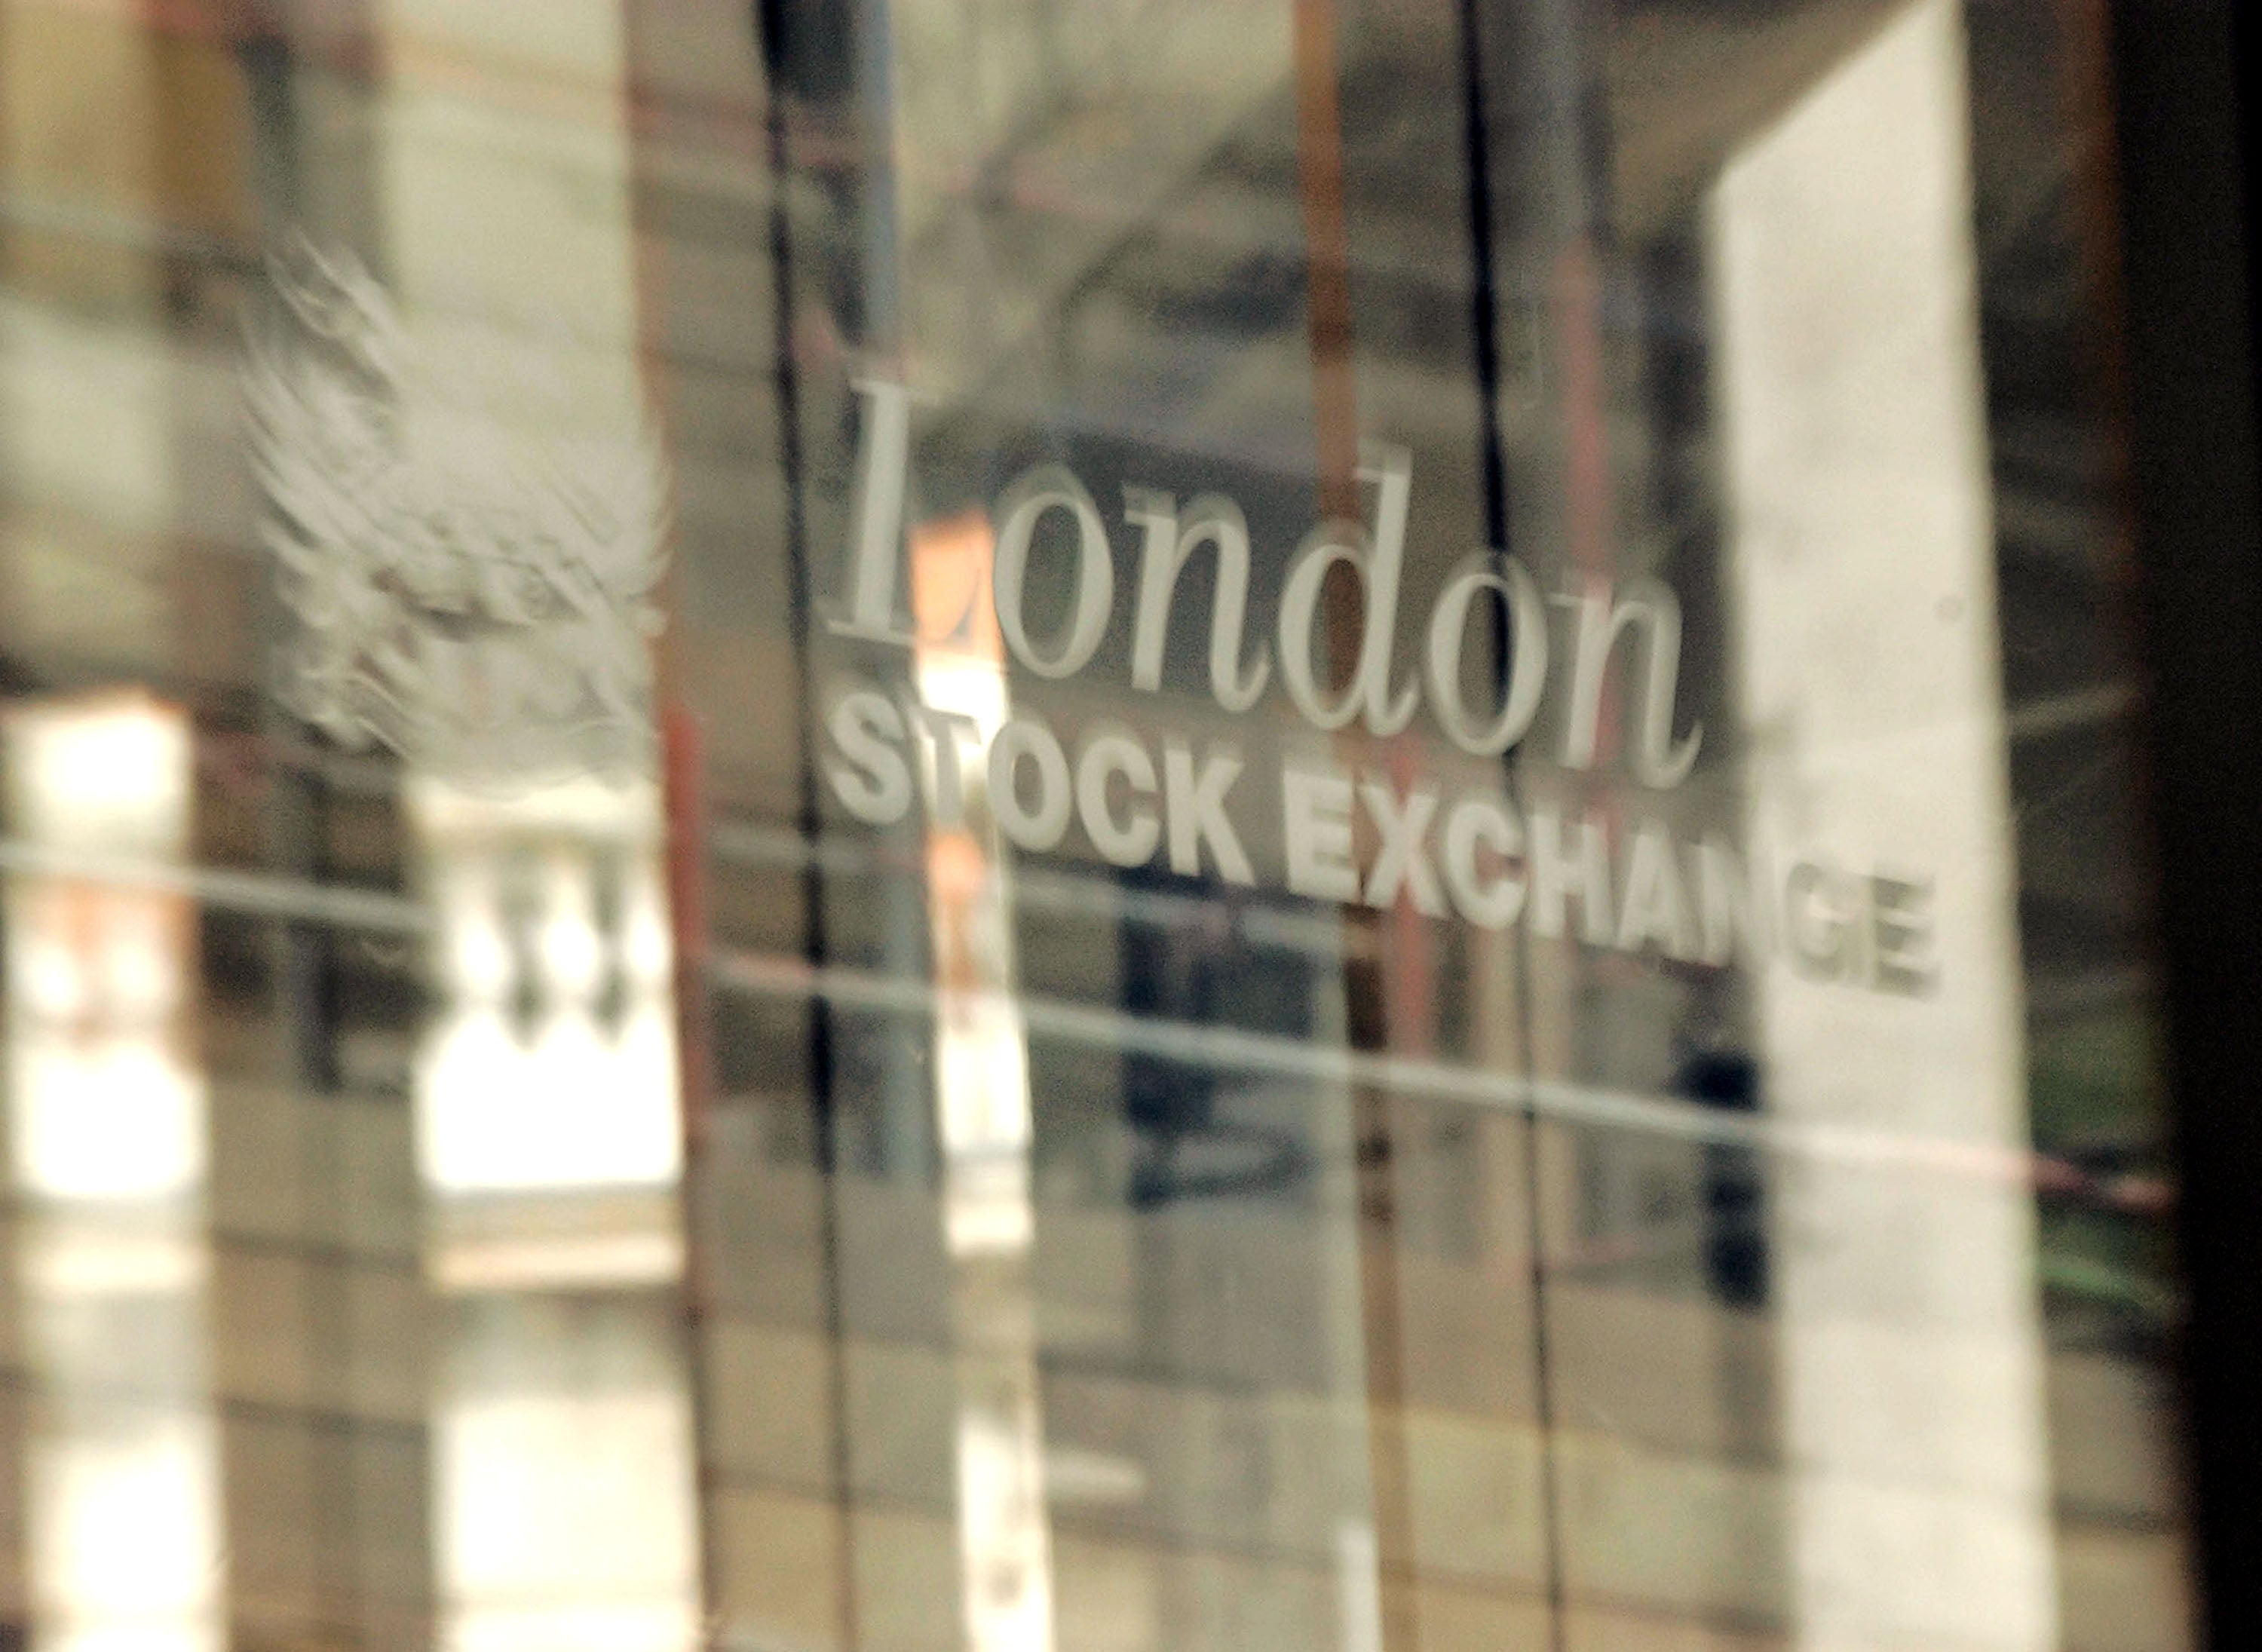 The London Stock Exchange window is seen March 10, 2003 in London.